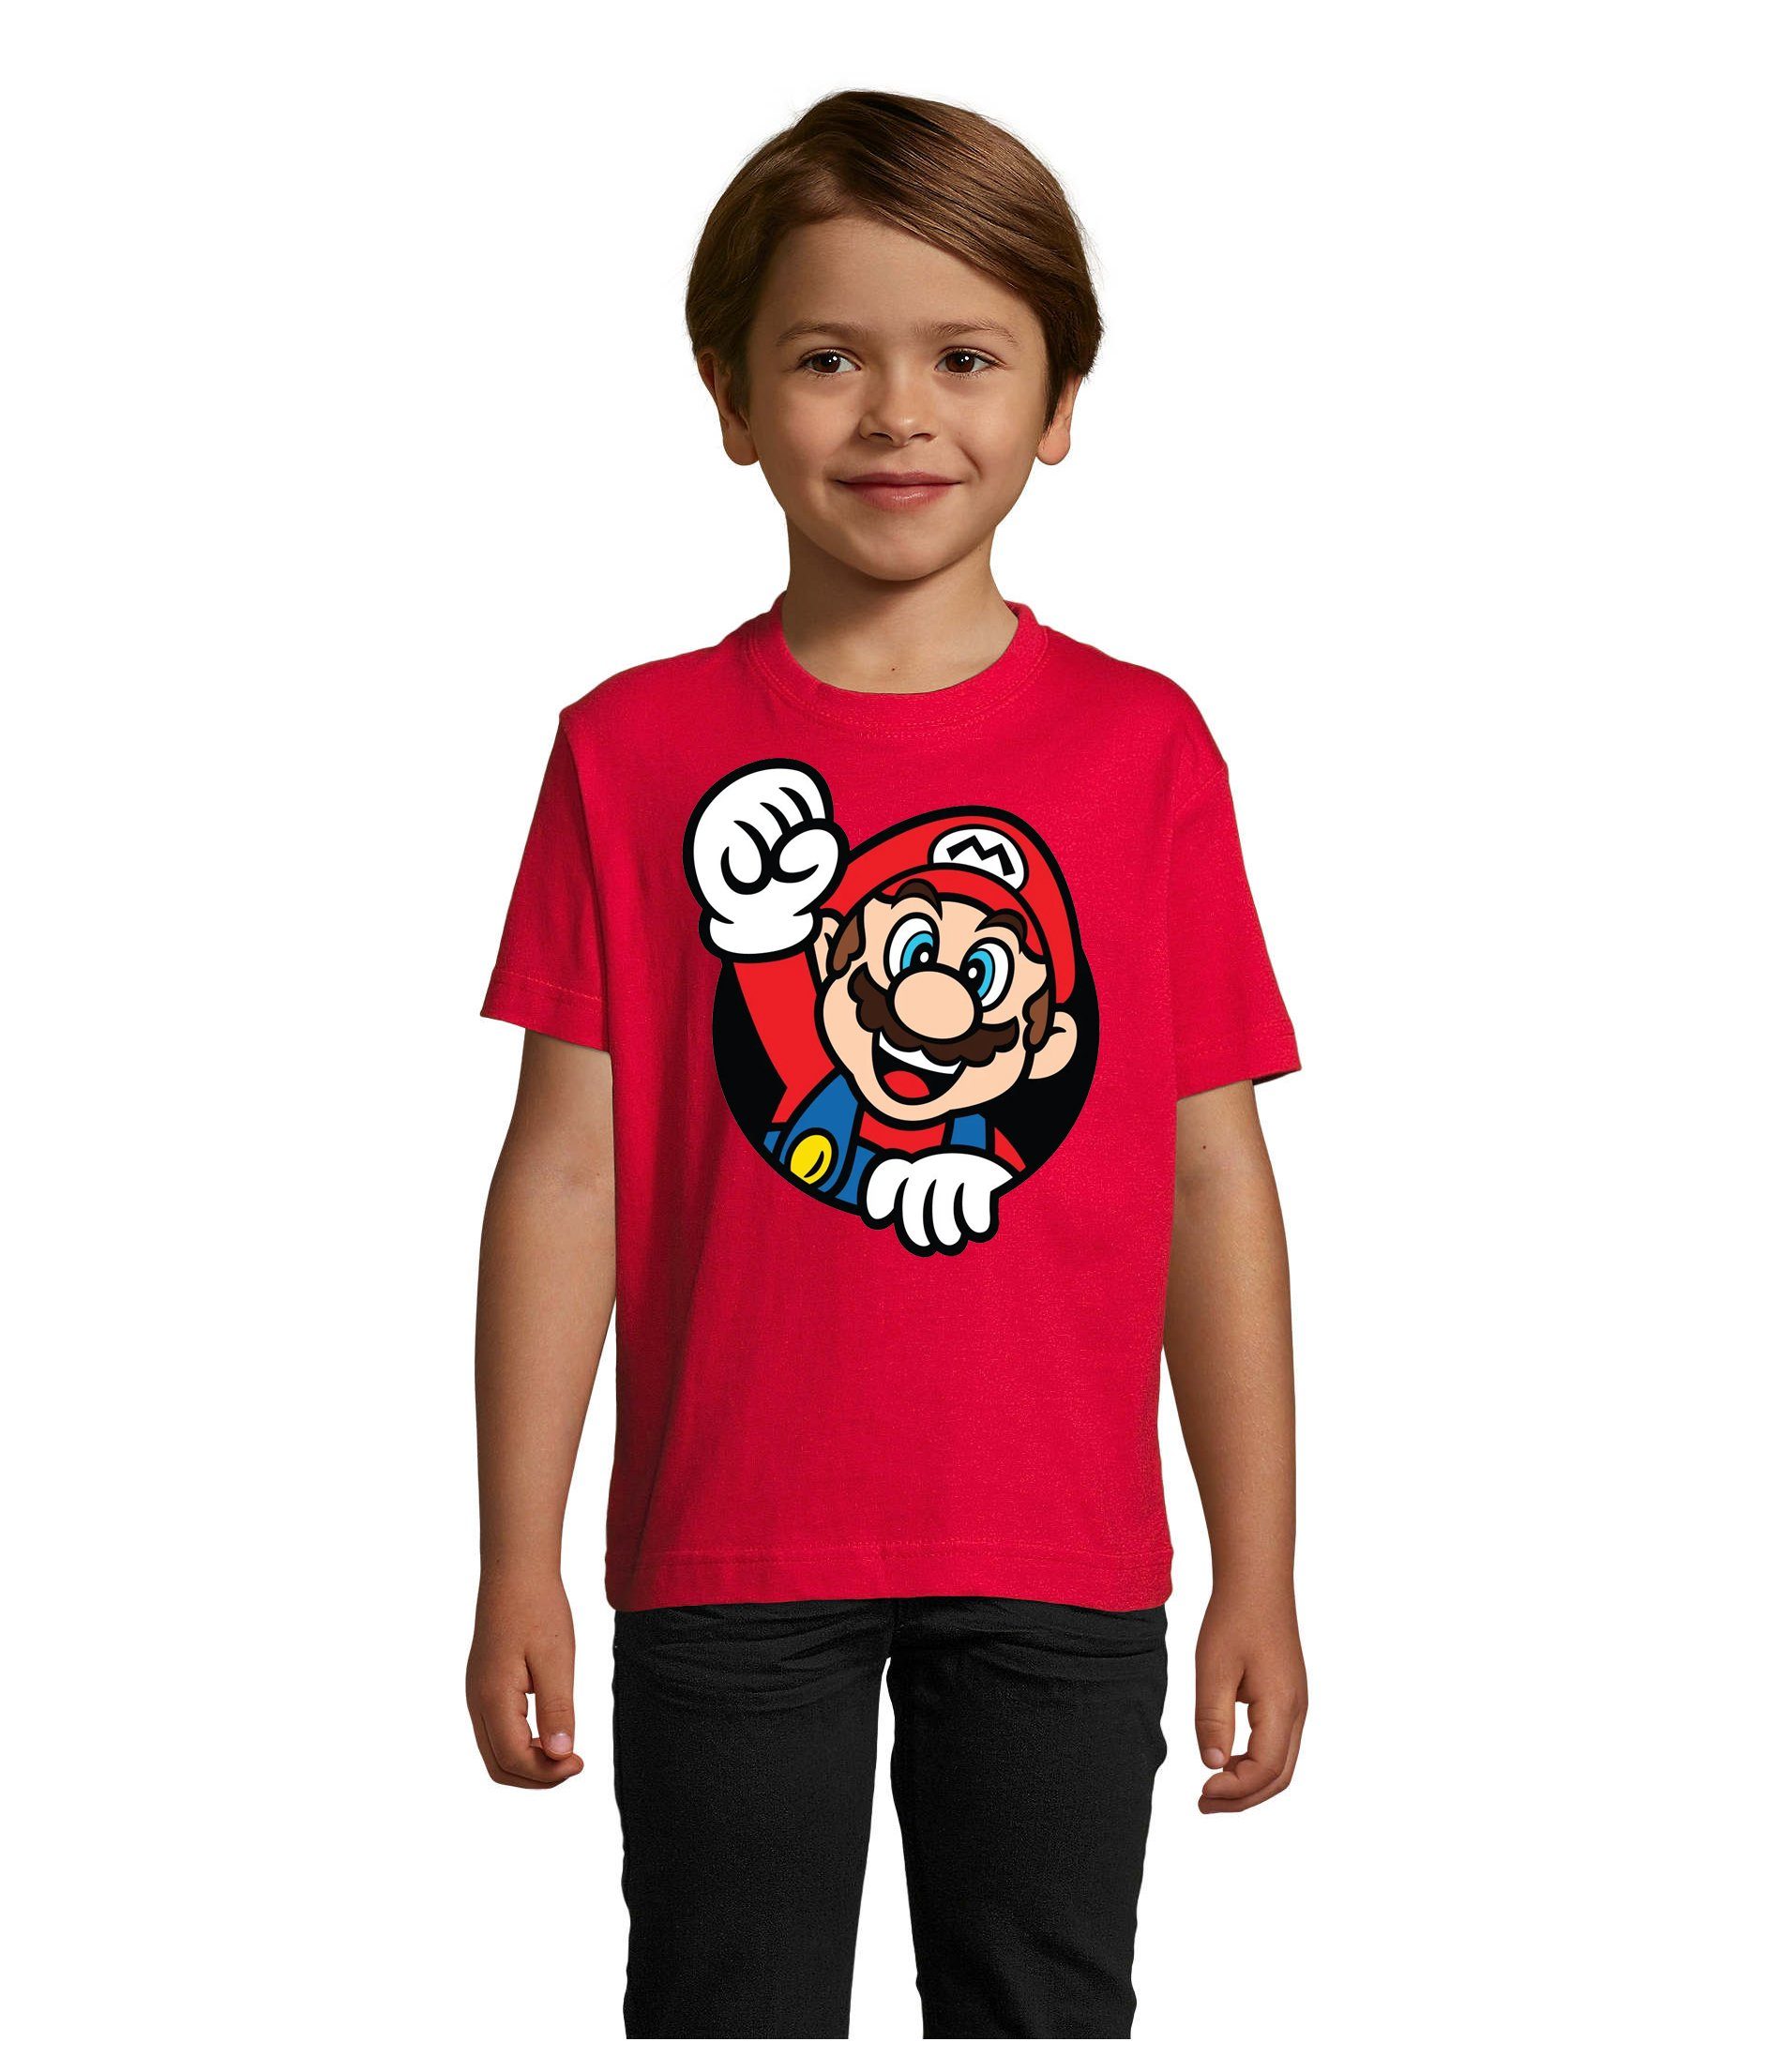 Nintendo Nerd Konsole Spiel Blondie Kinder Brownie T-Shirt Faust Gaming Rot Mario Super Konsole &